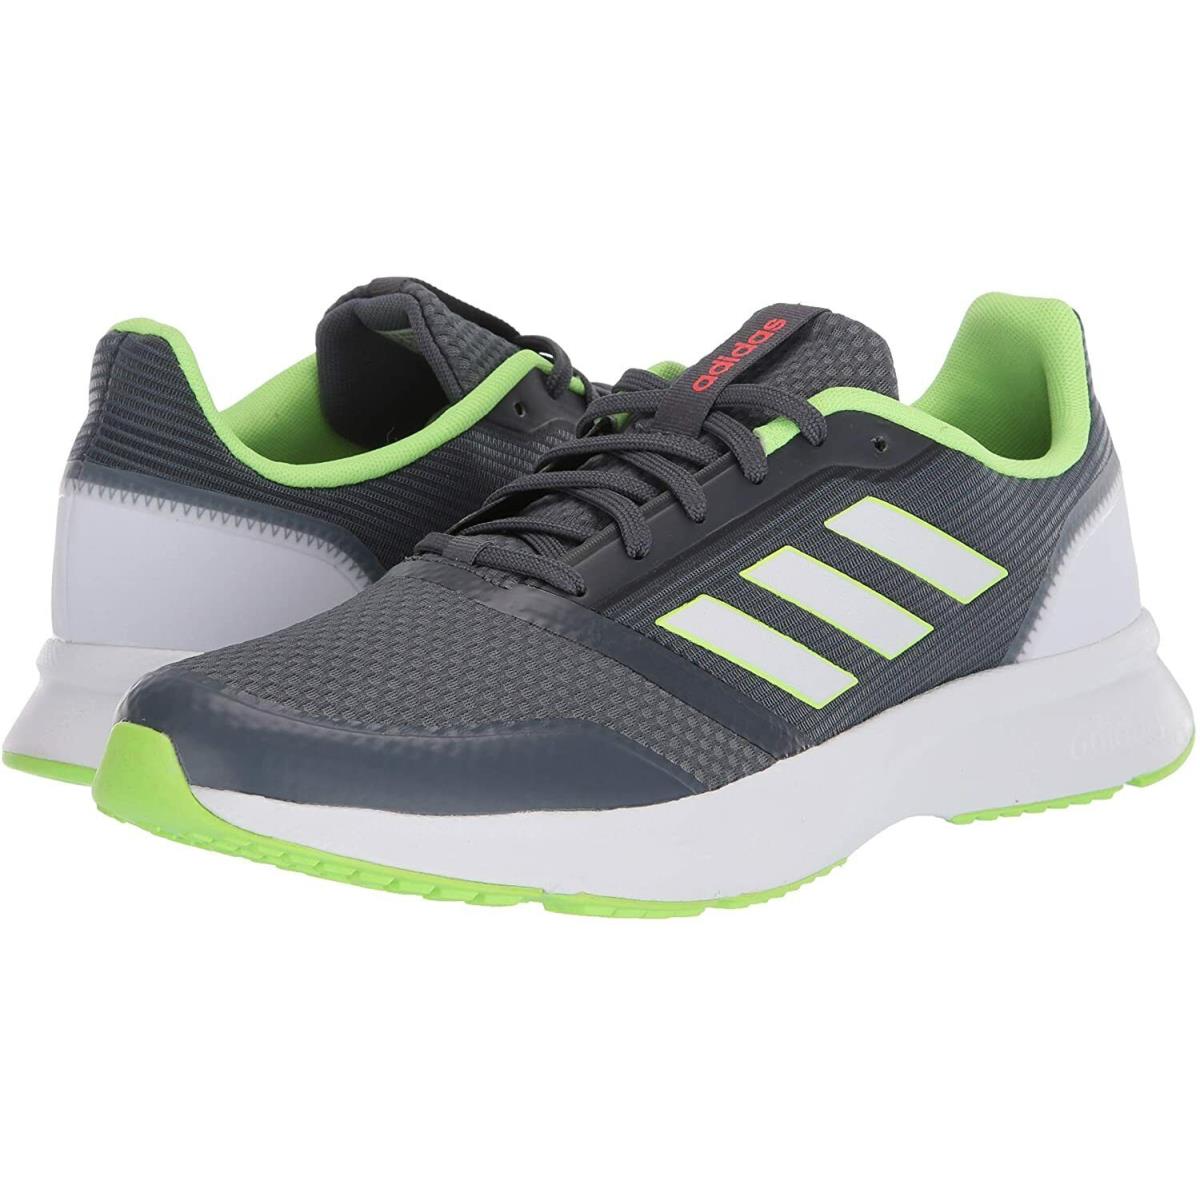 Adidas shoes PureBoost - Onix Grey/Green 5